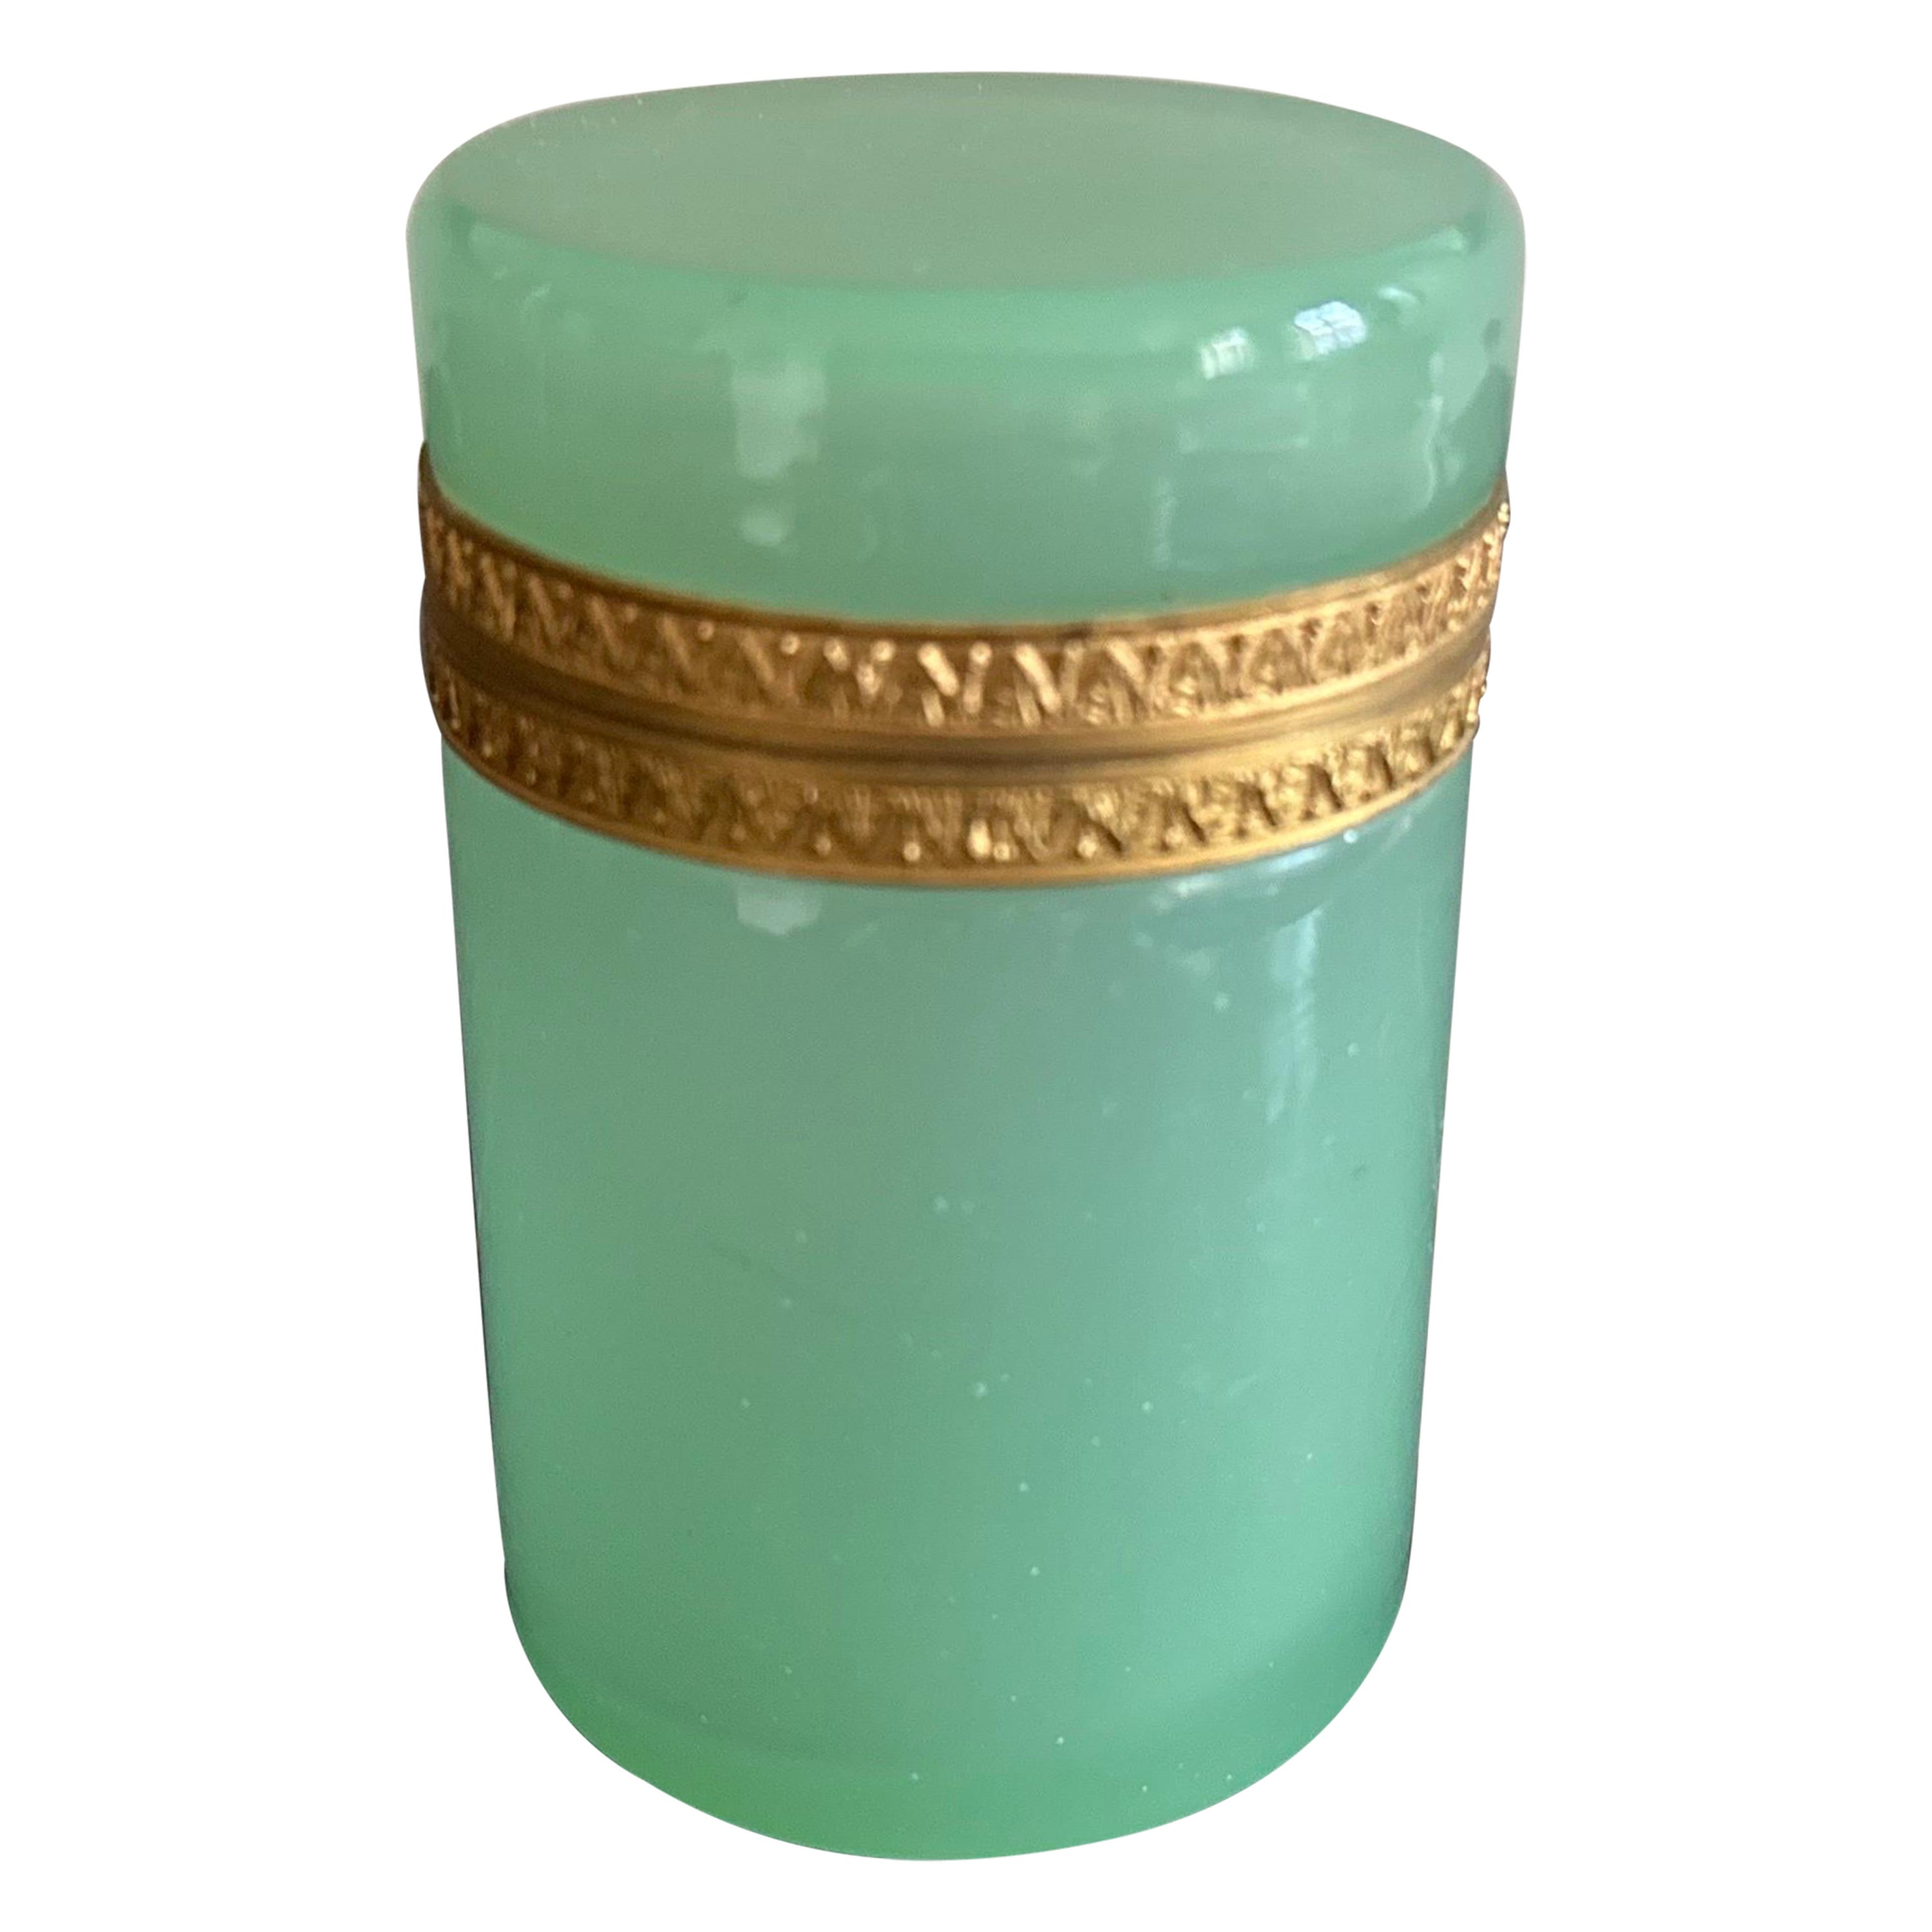  CENEDESE Glas Murano Schmuckkästchen - Jade Grün, Anfang 20. Jahrhundert Italien